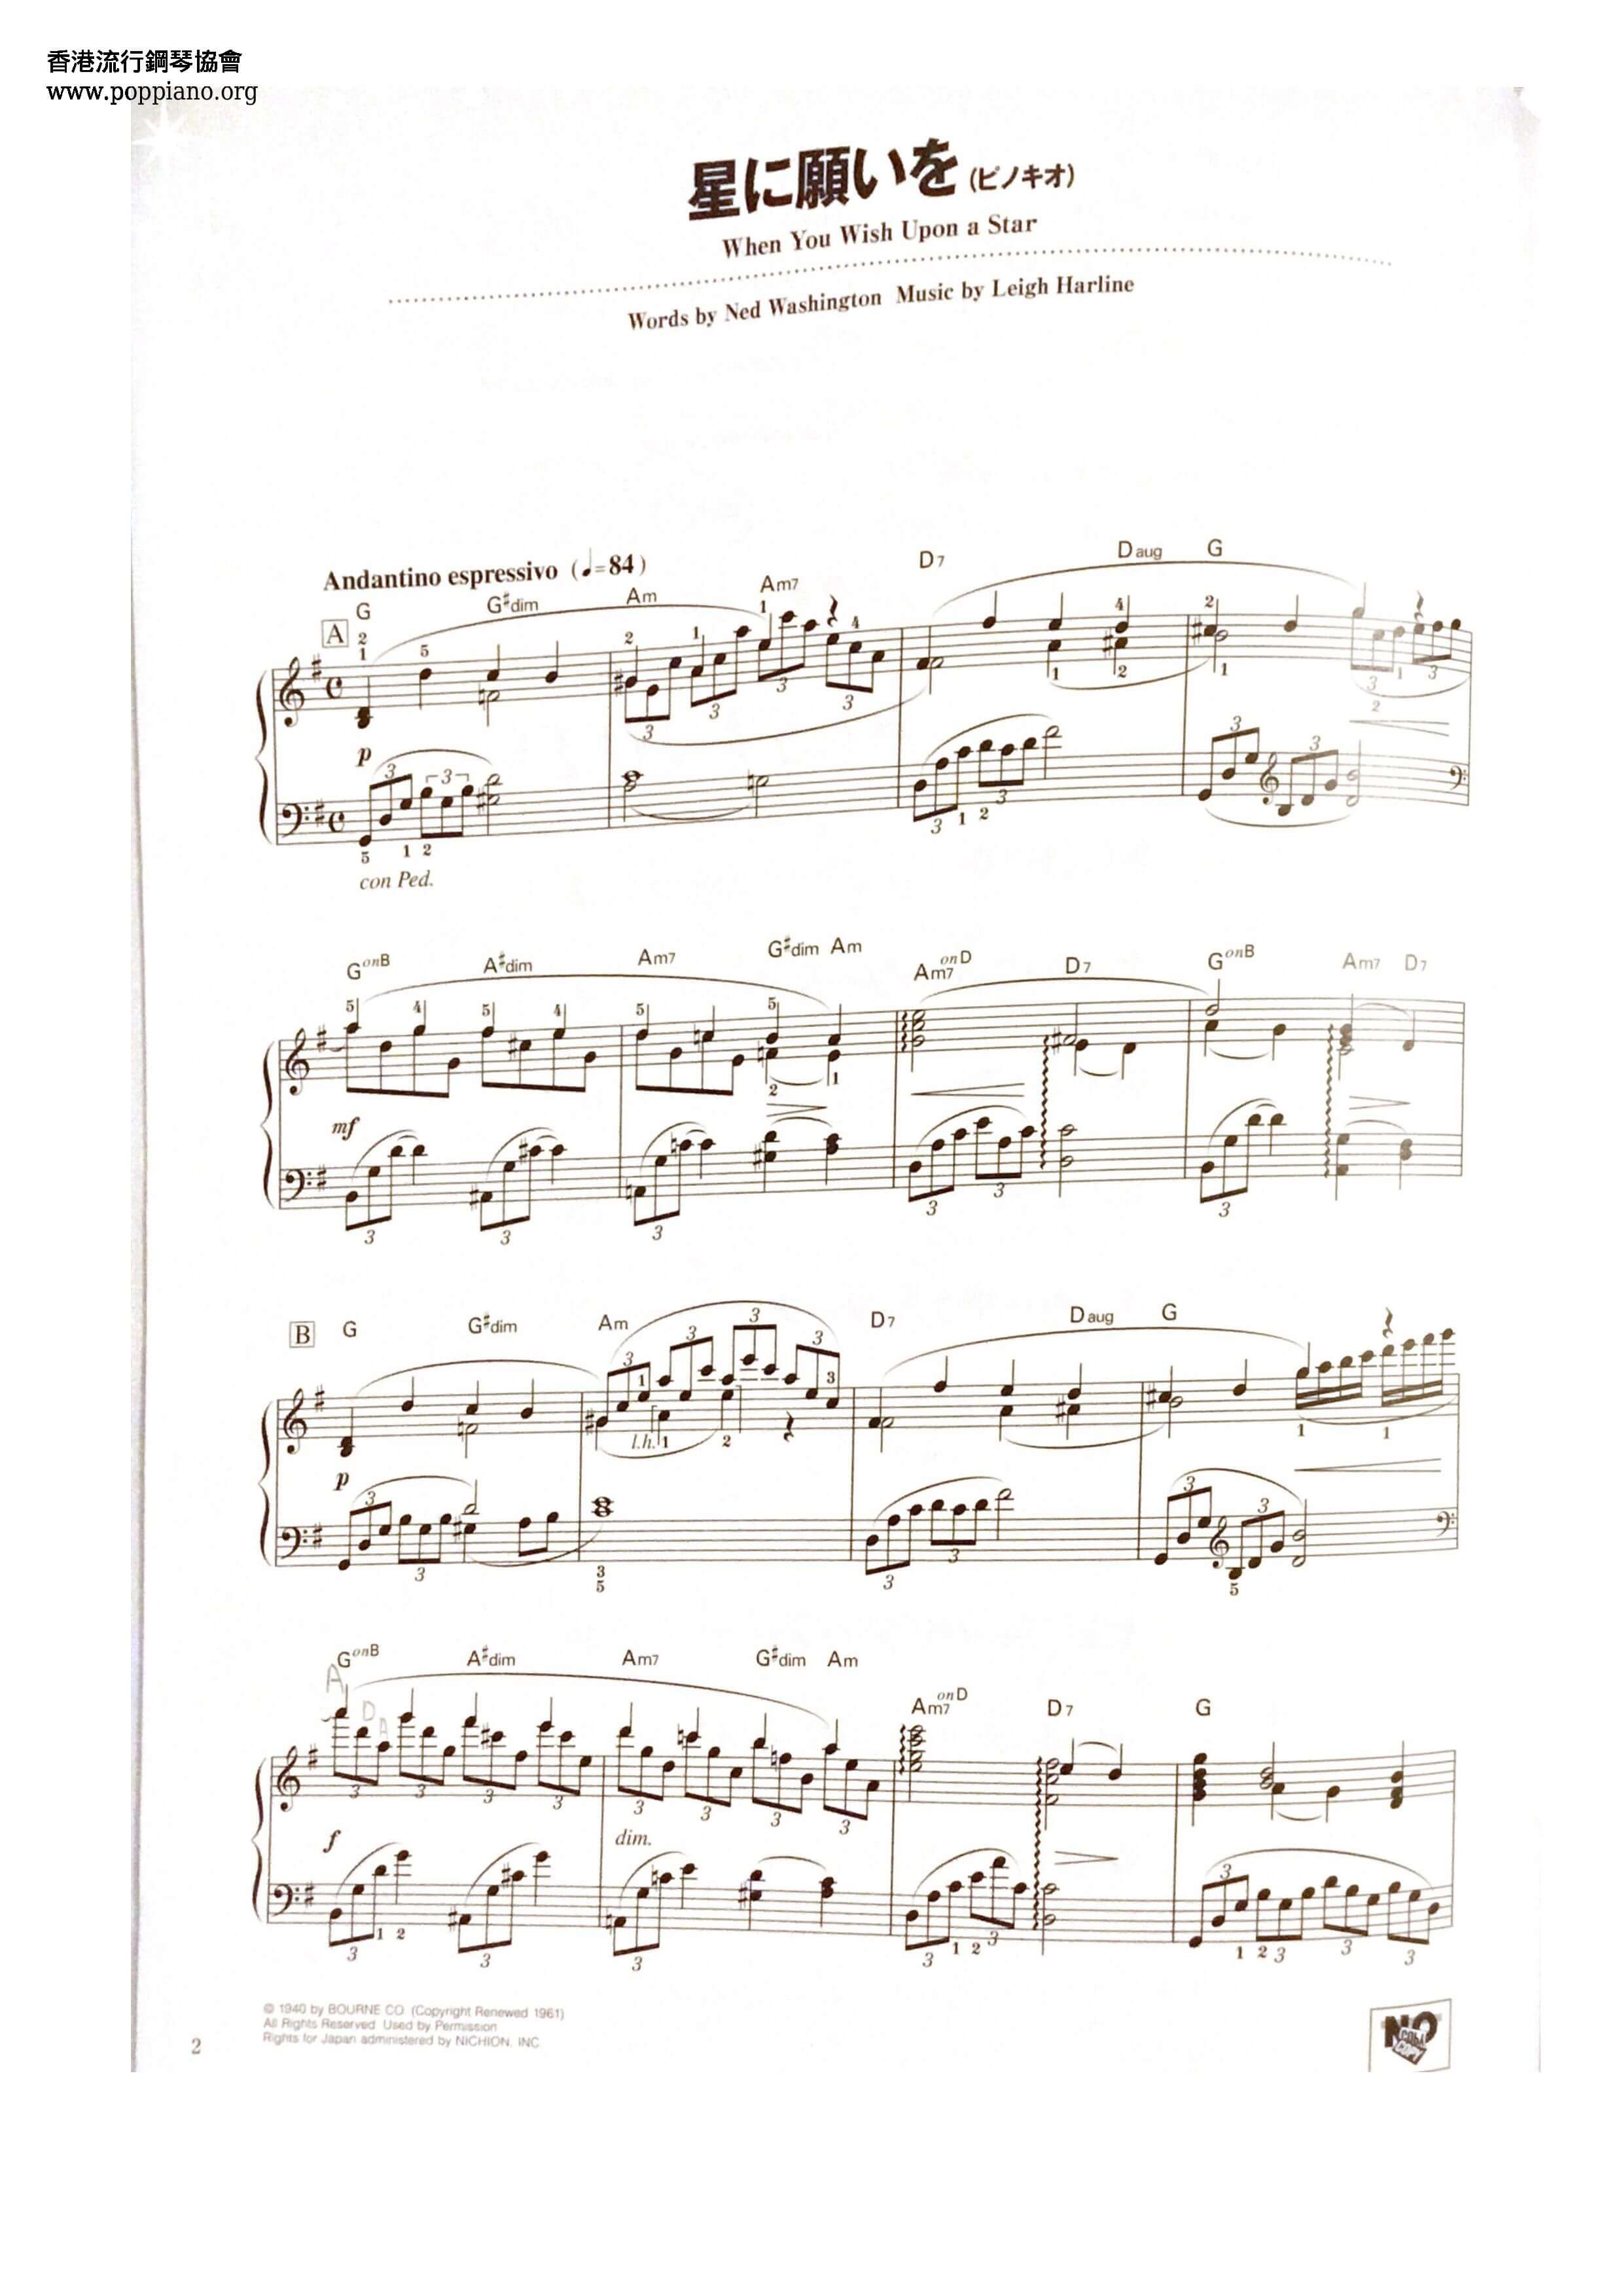 Pinocchio When You Wish Upon A Starall Versions Sheet Music Piano Score Free Pdf Download Hk Pop Piano Academy